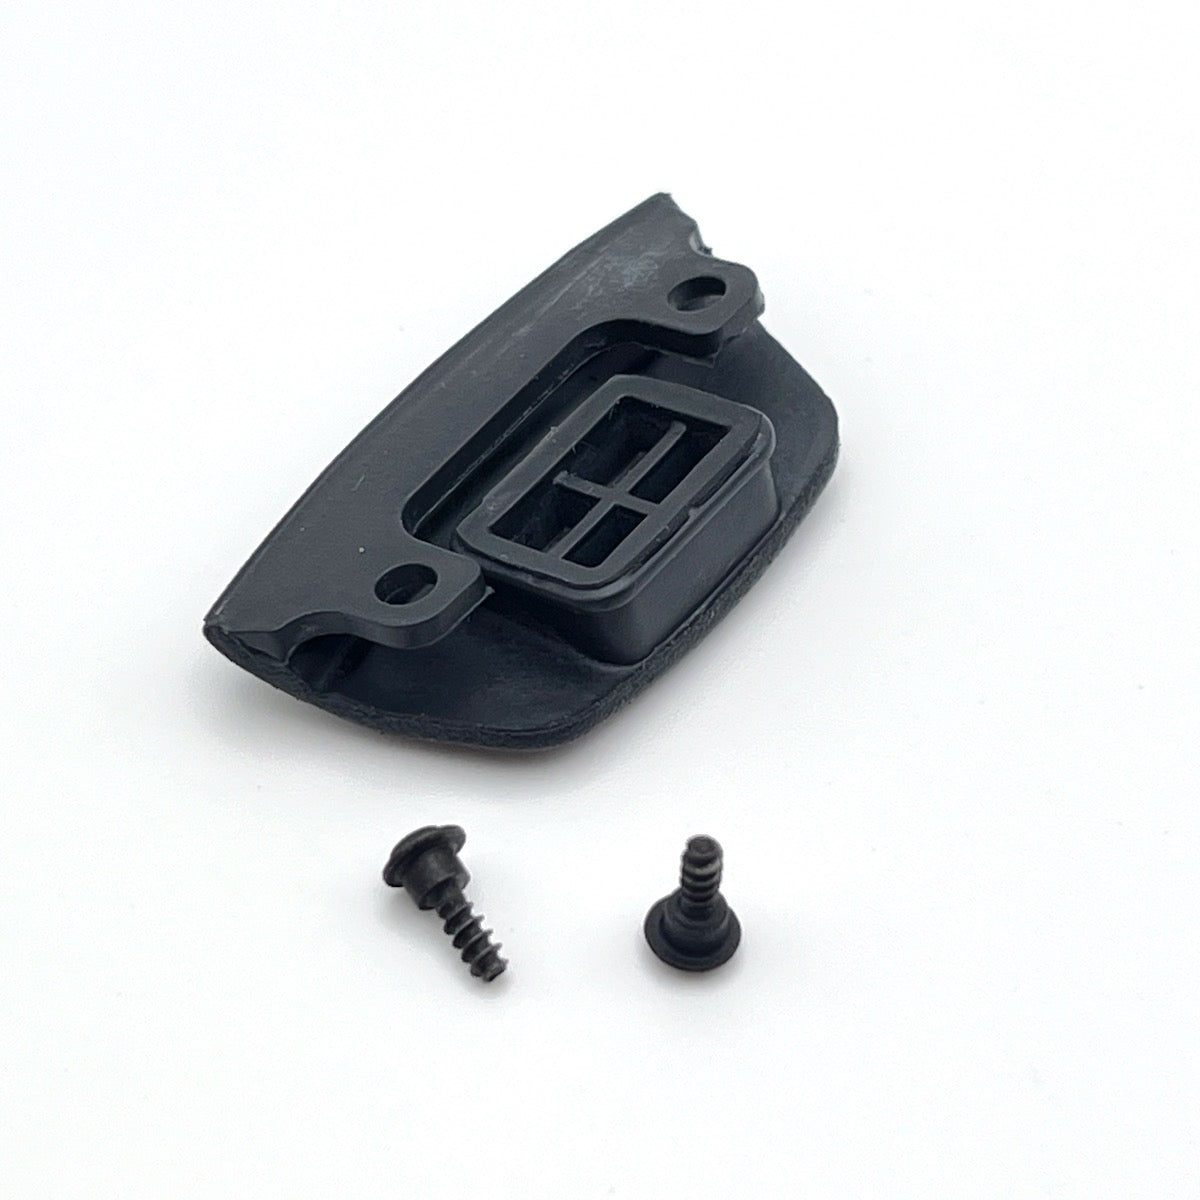 Rubber cap USB Garmin eTrex 10 20 30 part repair rubber